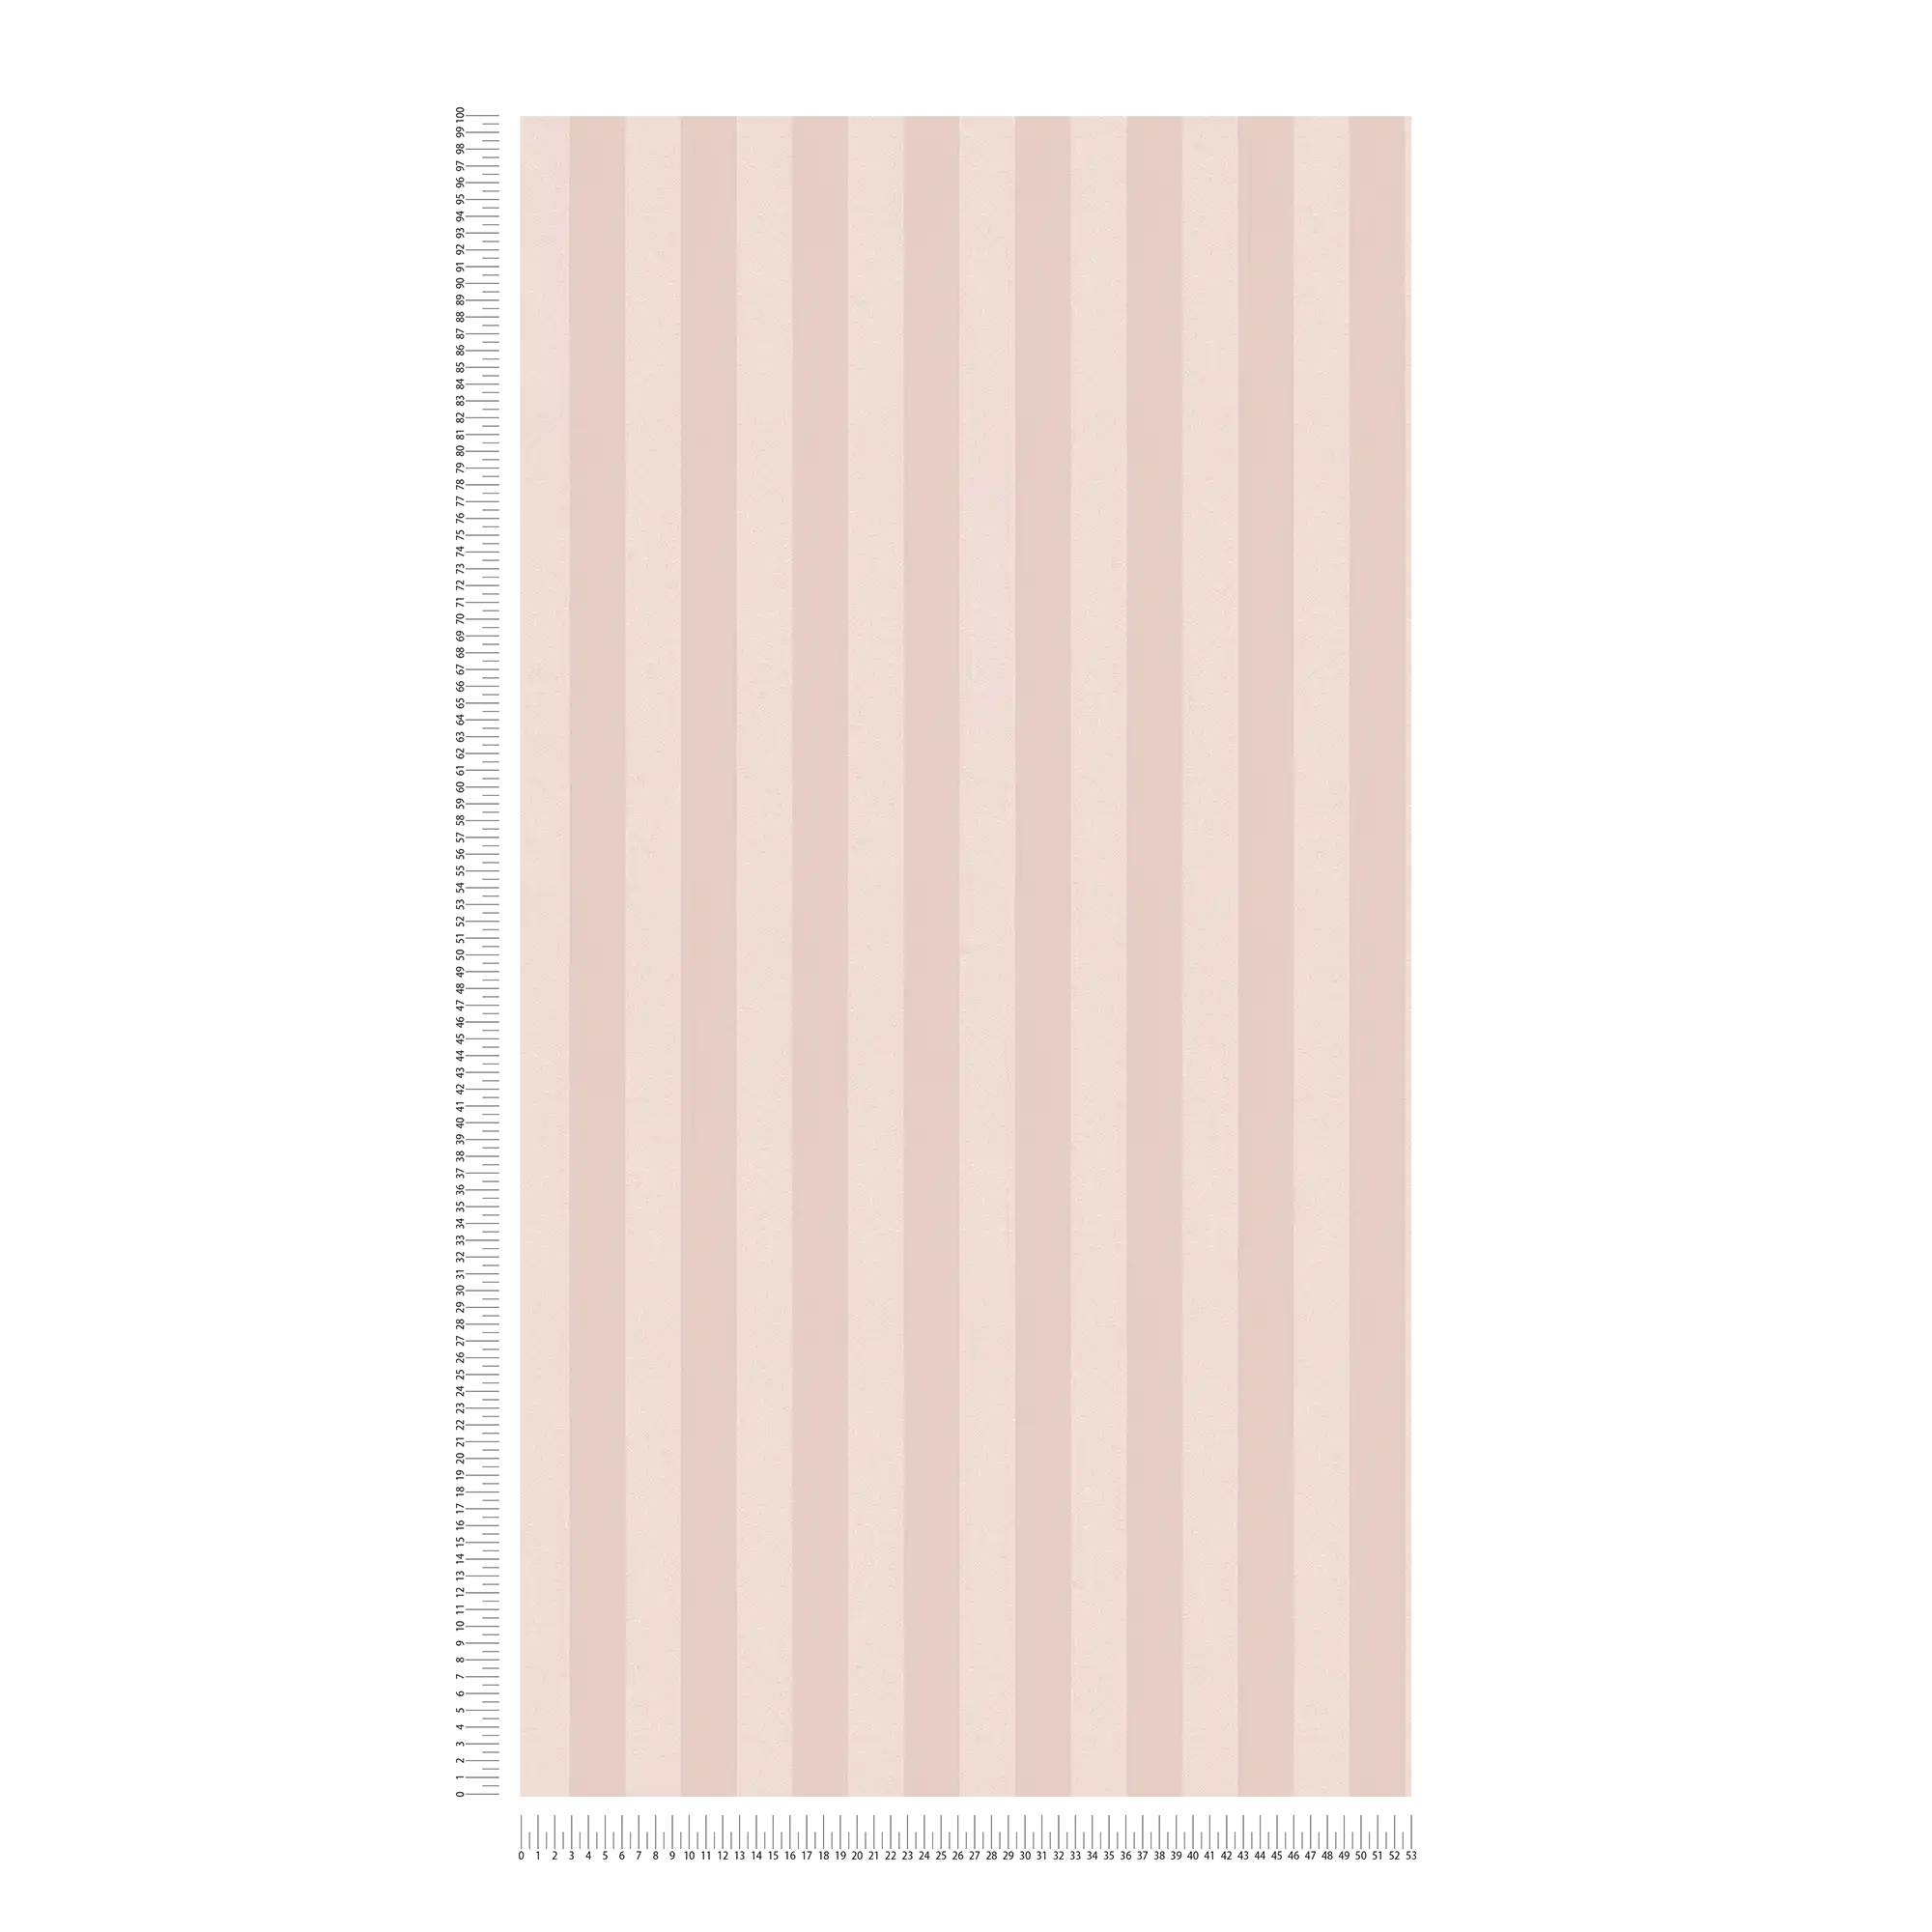             Streepjesbehang met patroon in delicaat oudroze - Roze
        